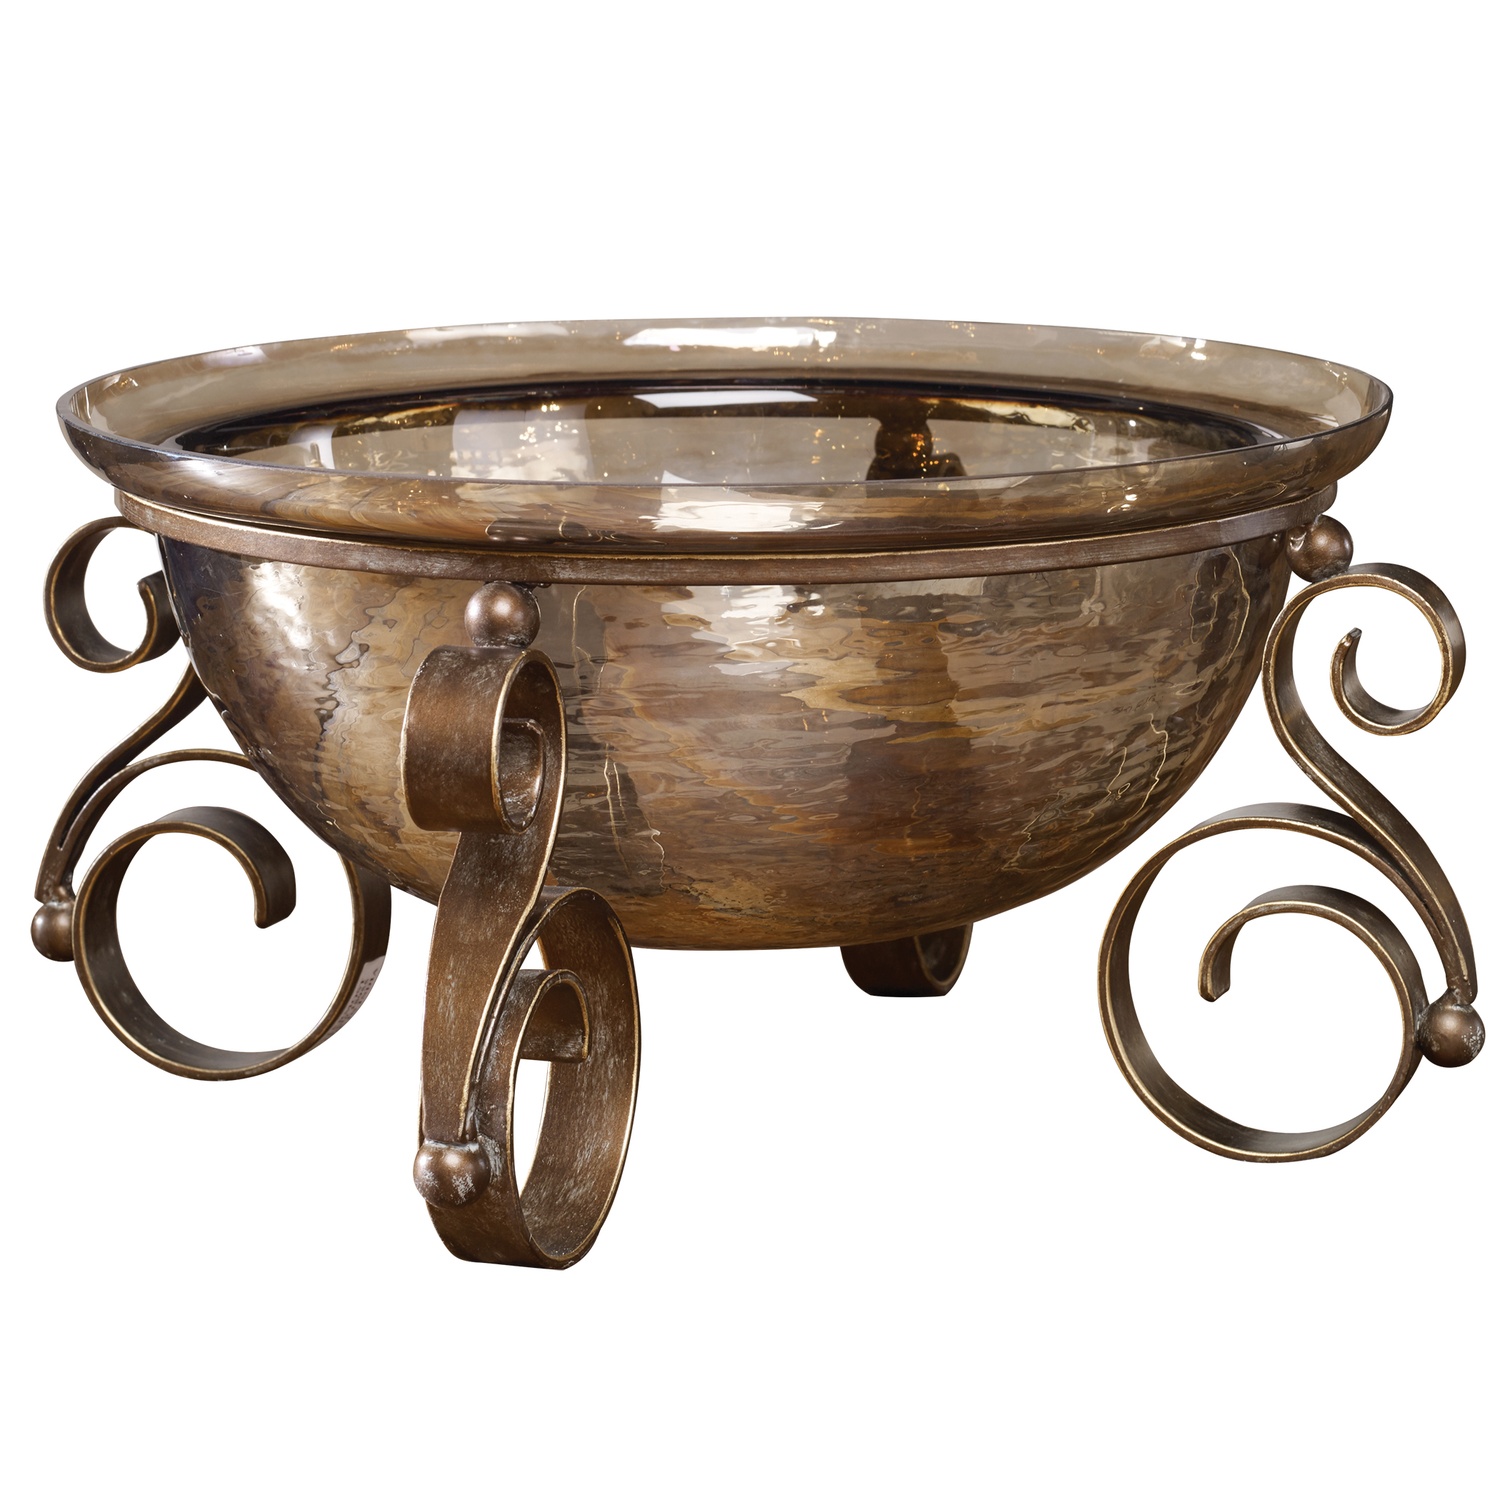 Alya-Decorative Bowls & Trays